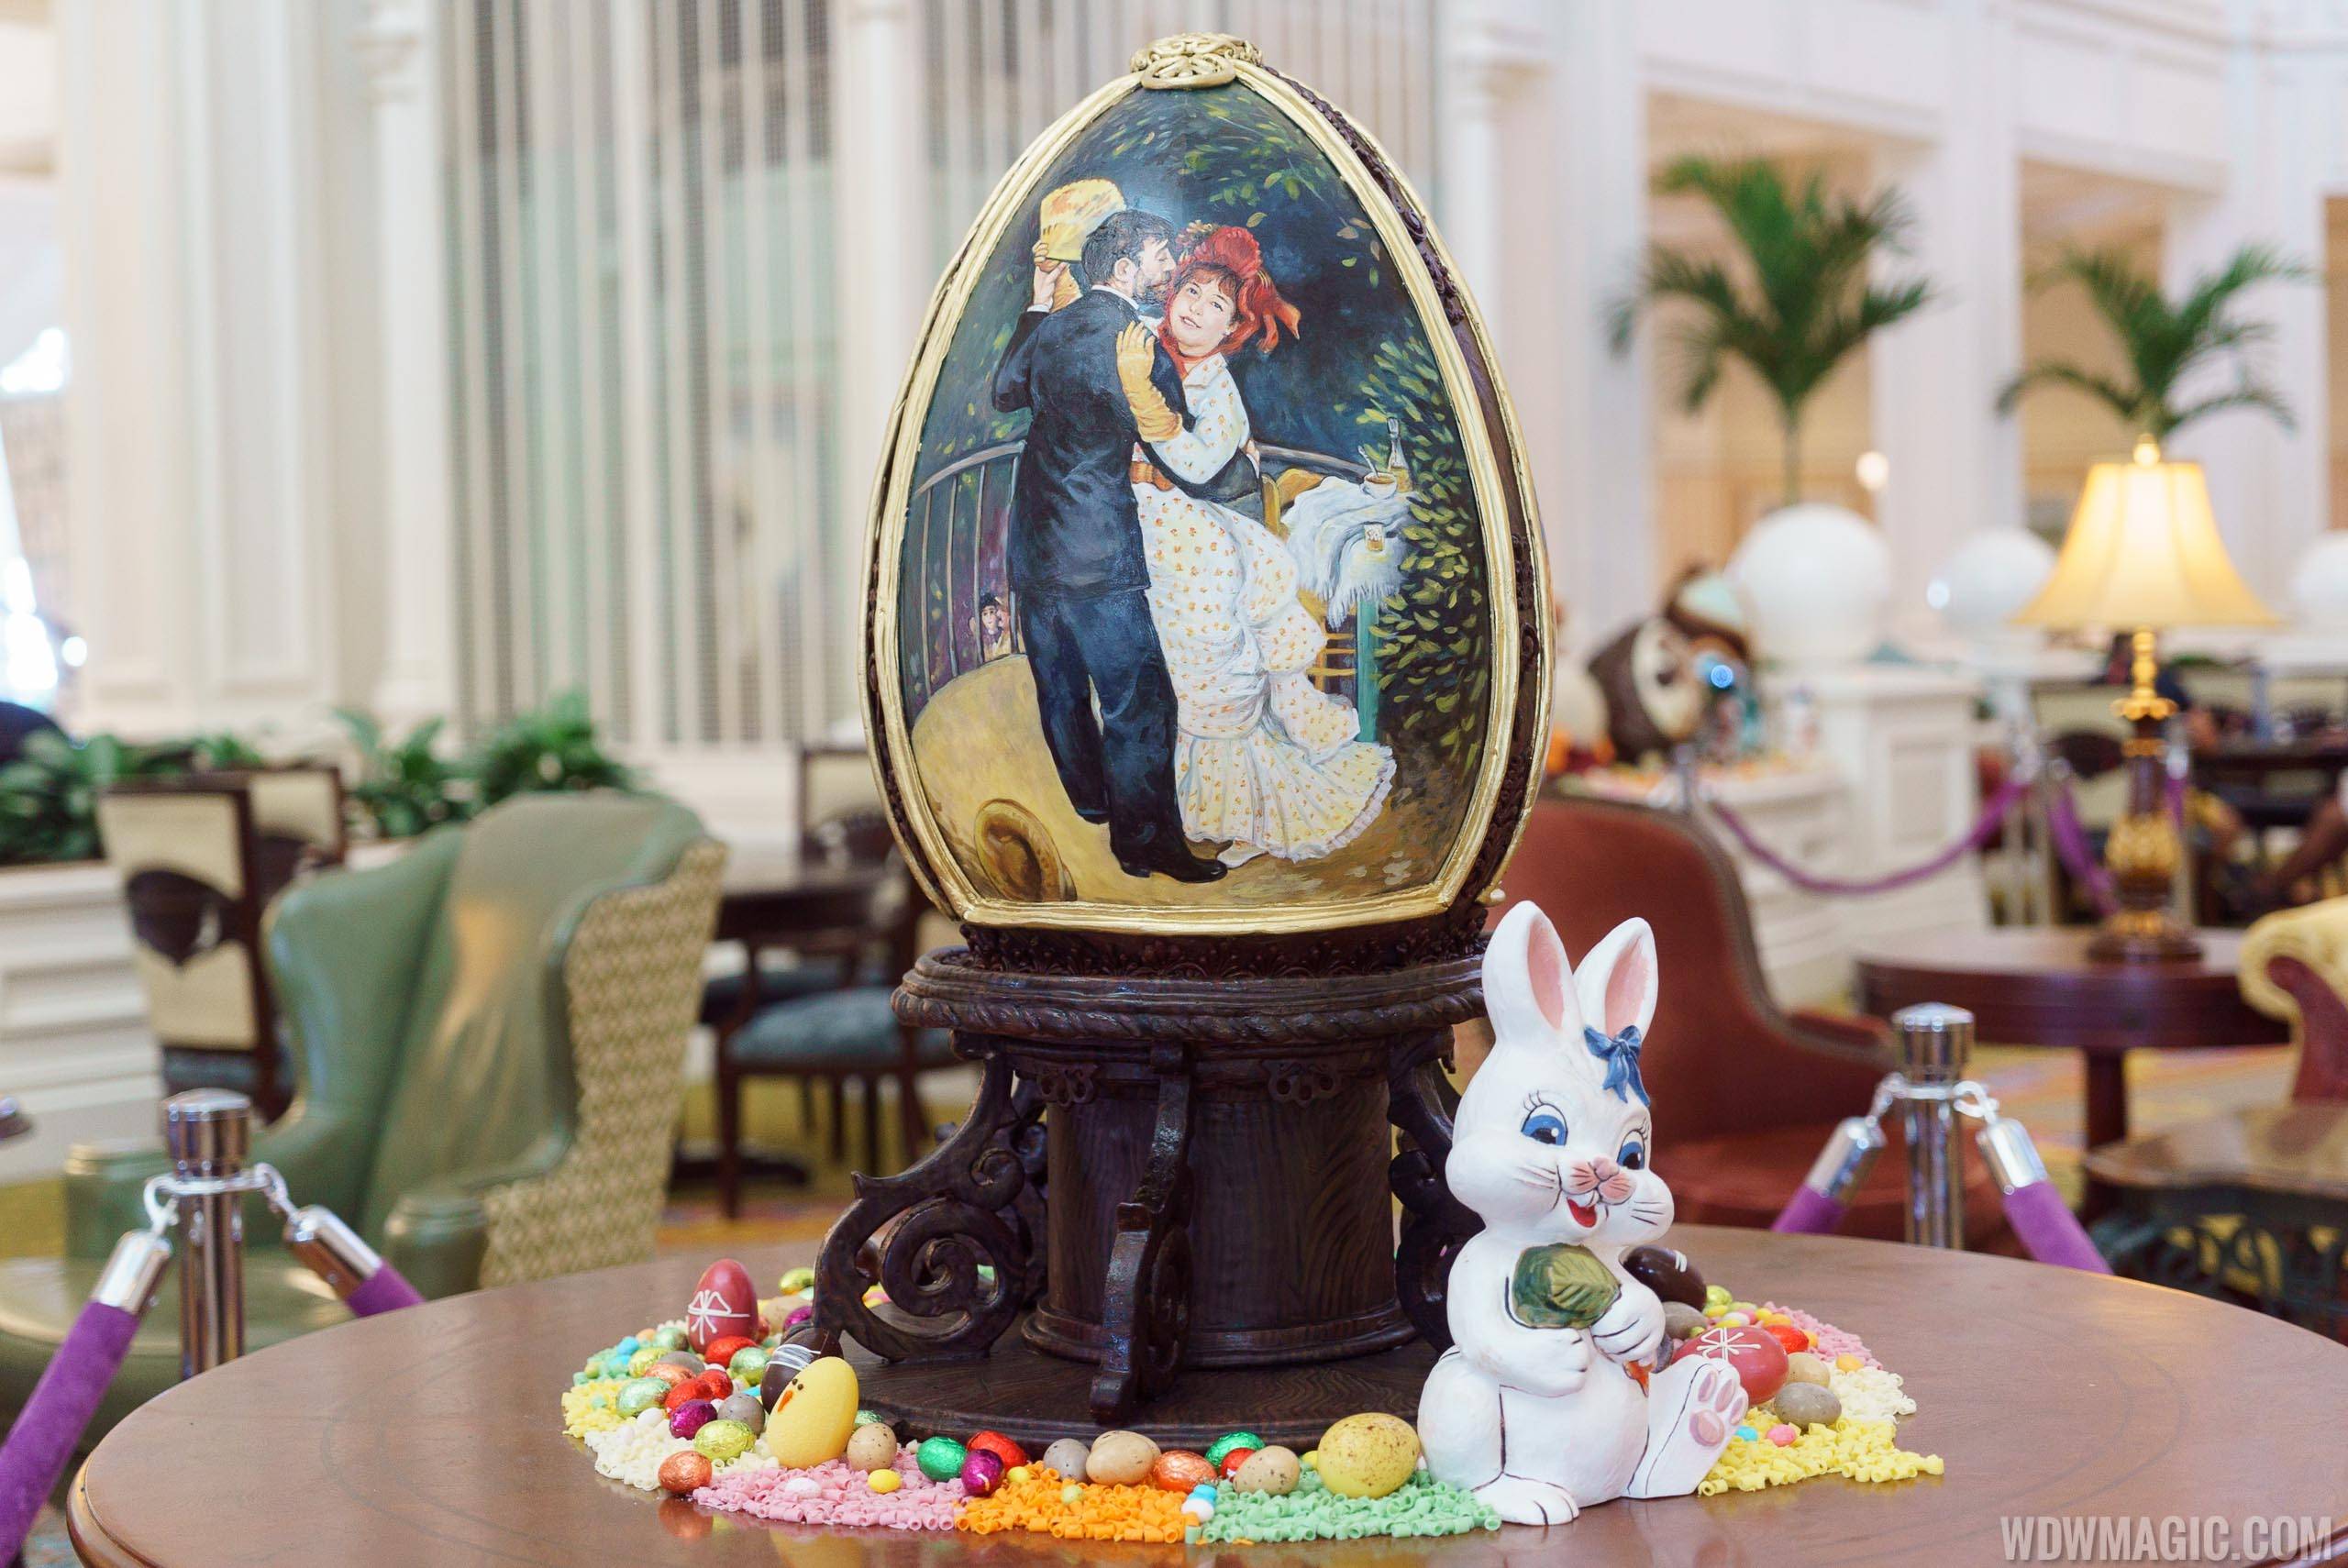 PHOTOS - Easter Egg display at Disney's Grand Floridian Resort